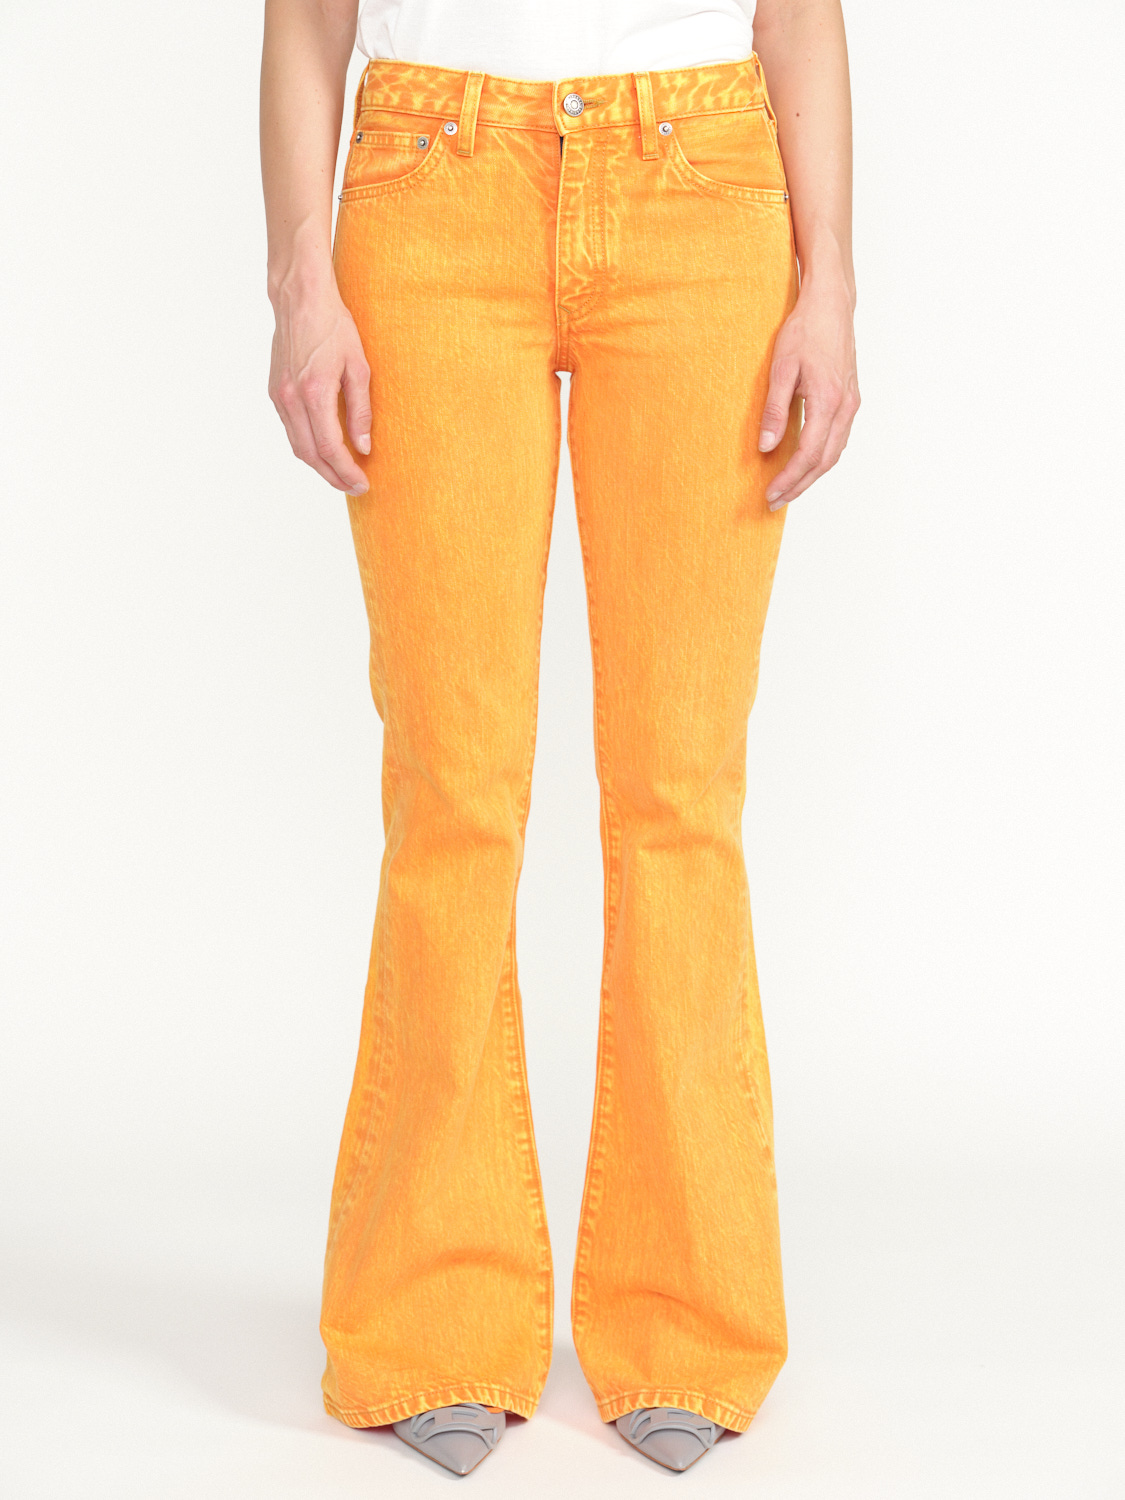 Cout De La Liberte Britney - denim flare pants with washed out look orange 25